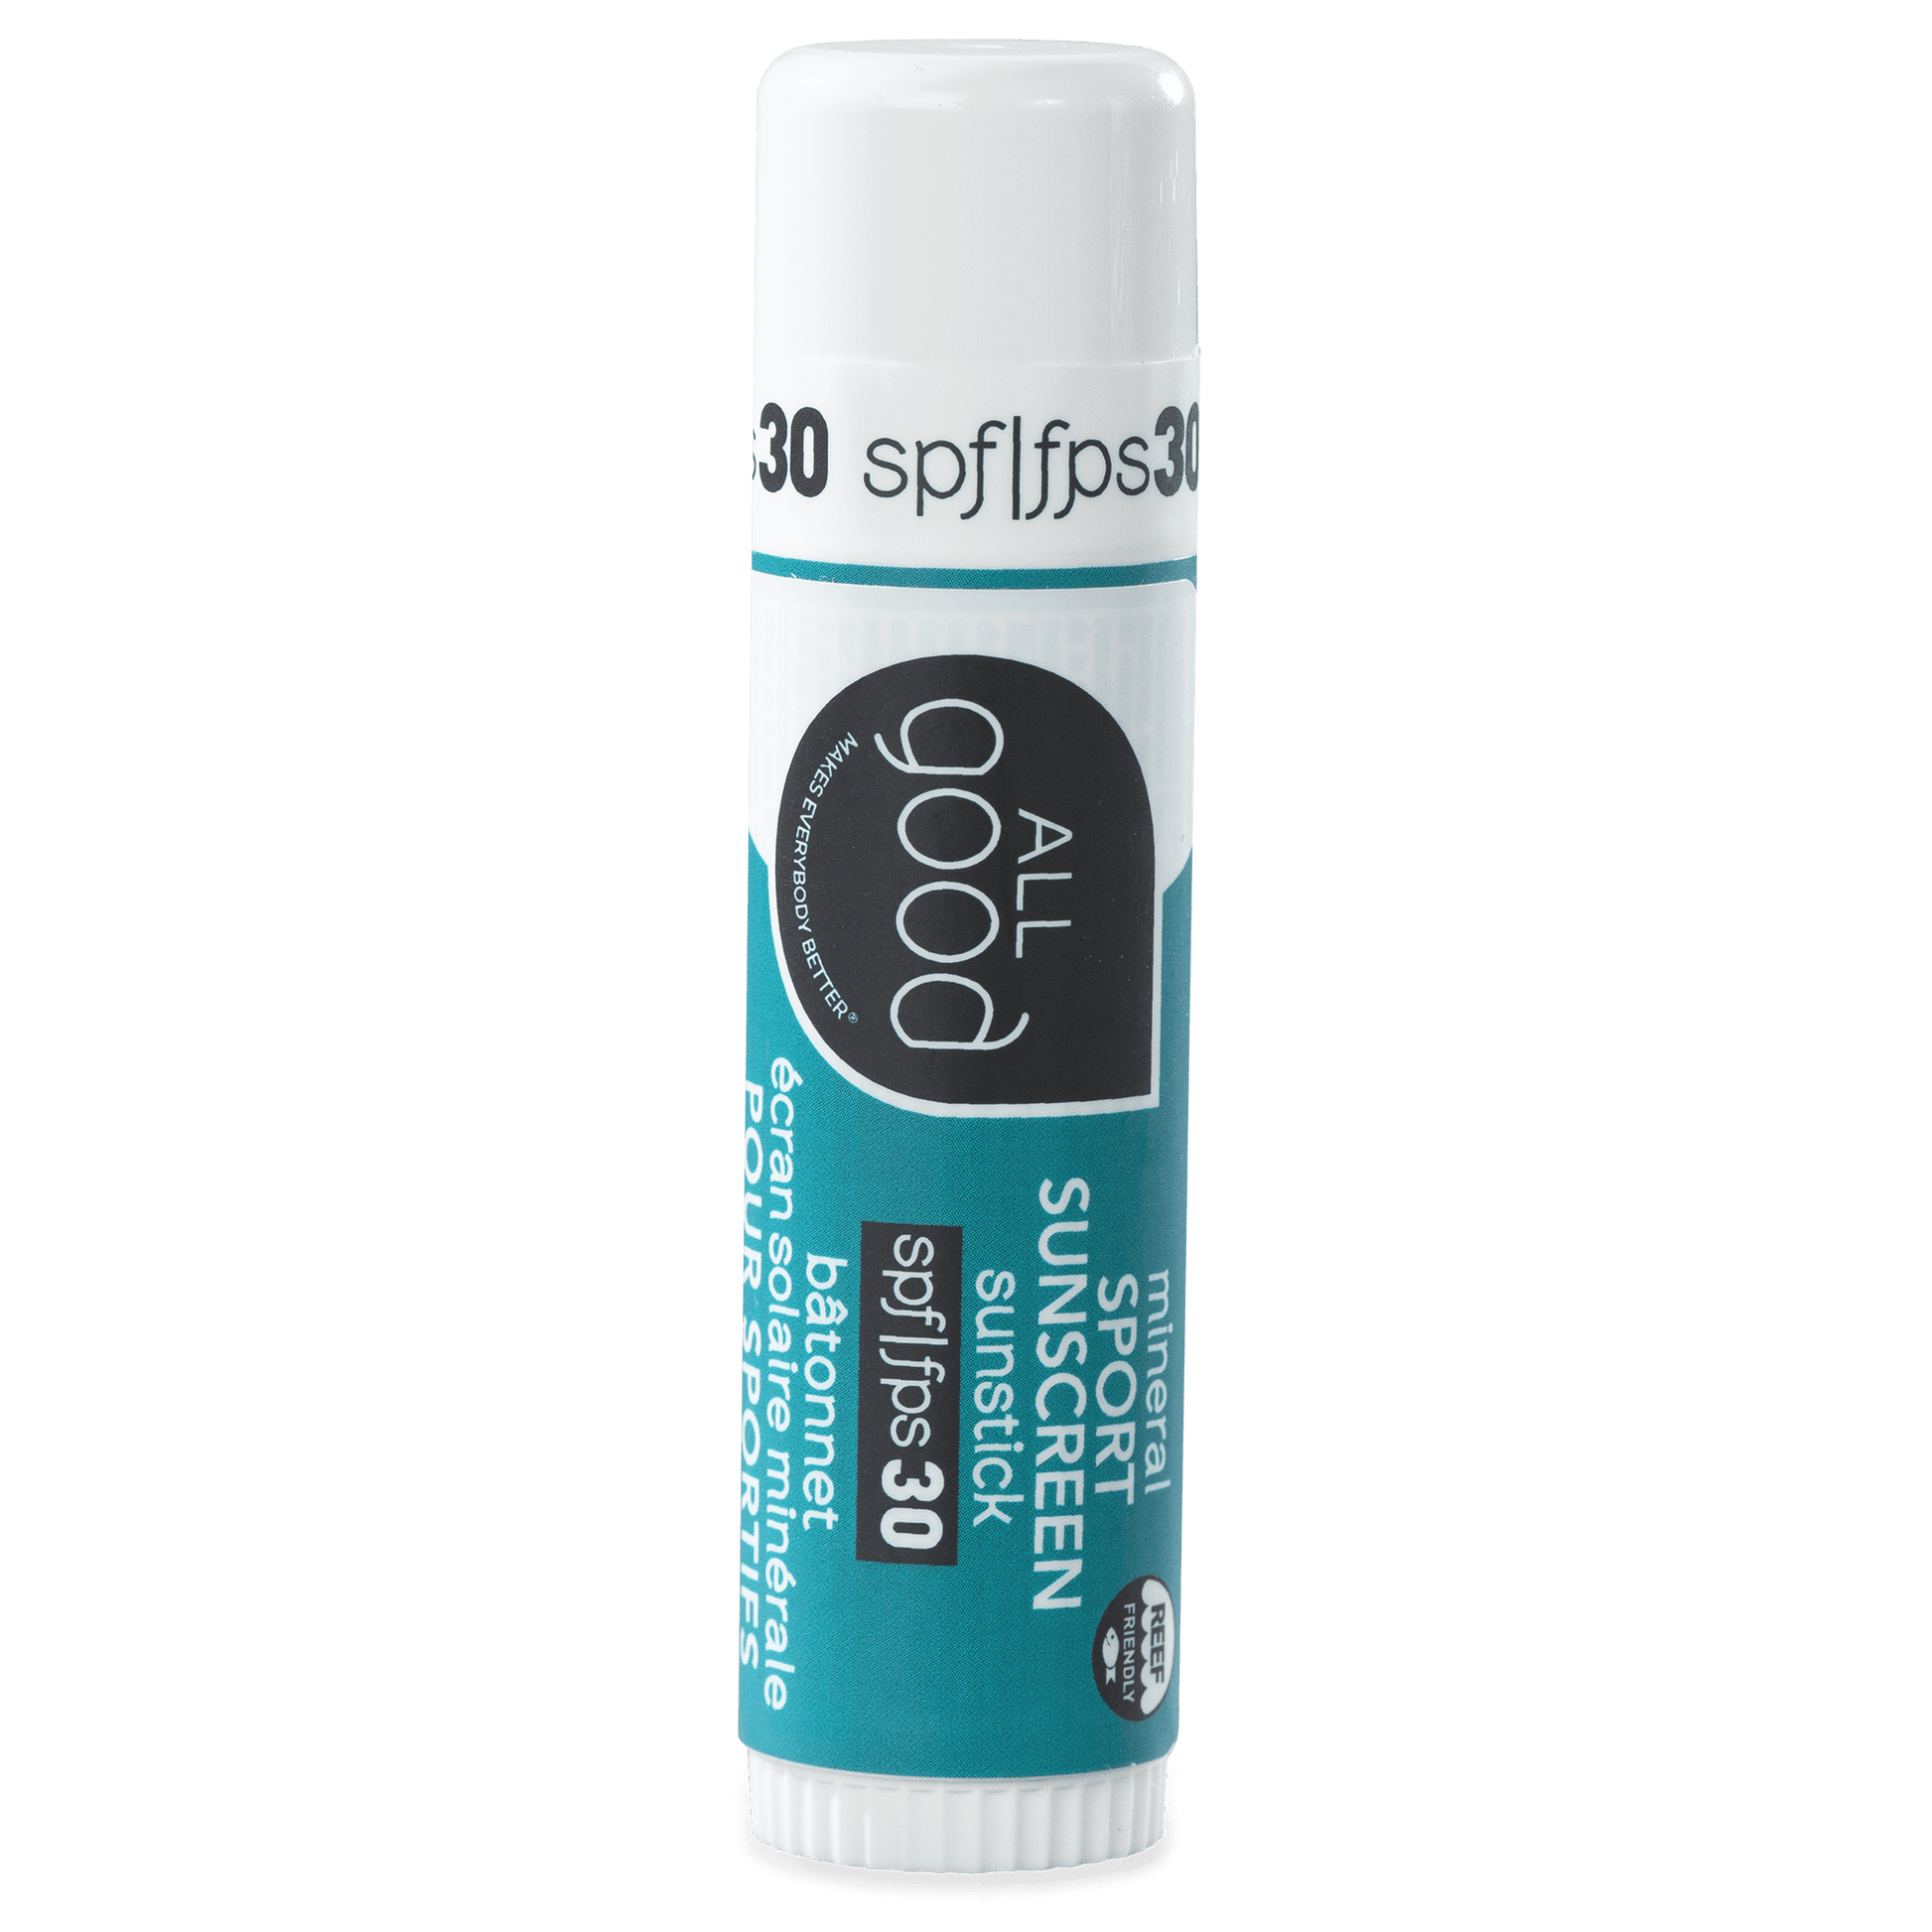 All Good Body Care - Mineral Sunstick SPF30 - Sport, .6 oz - 1